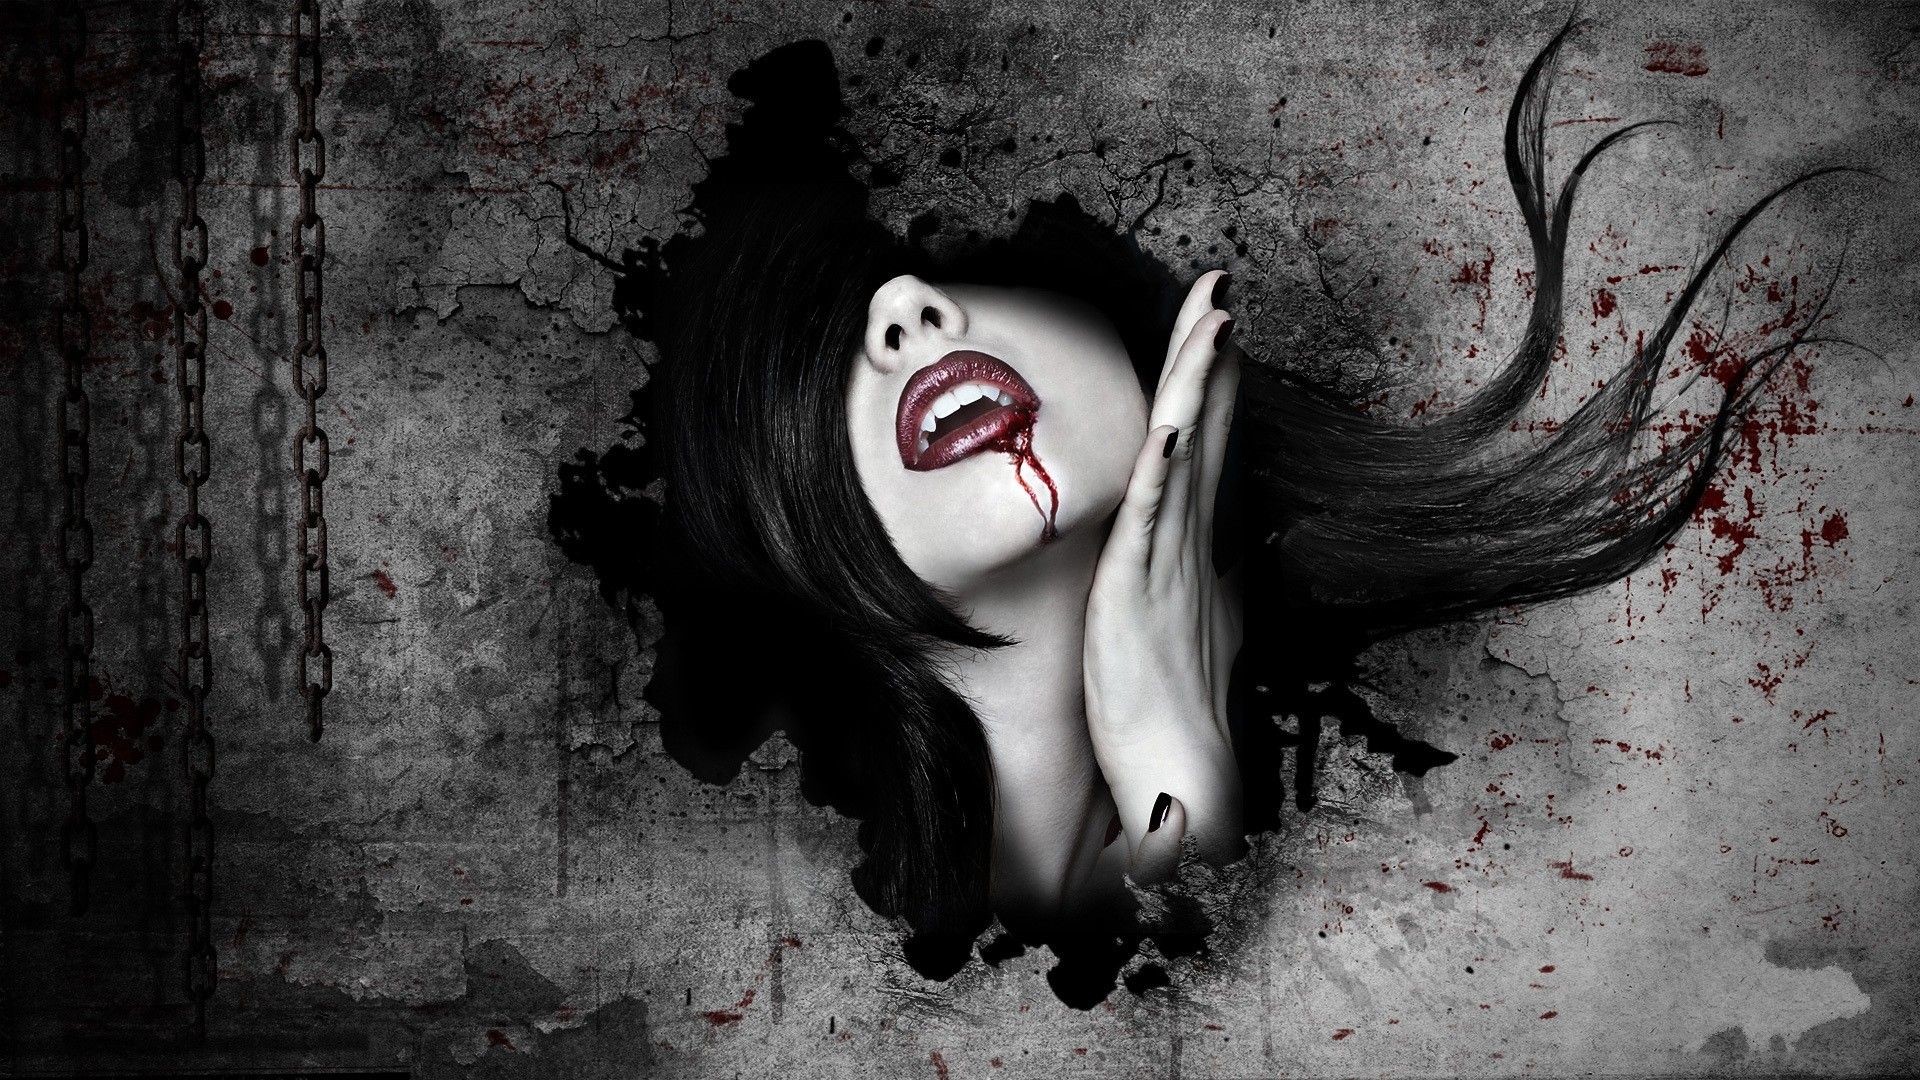 1920x1080 Dark horror fantasy art gothic women vampires blood face wallpaper .